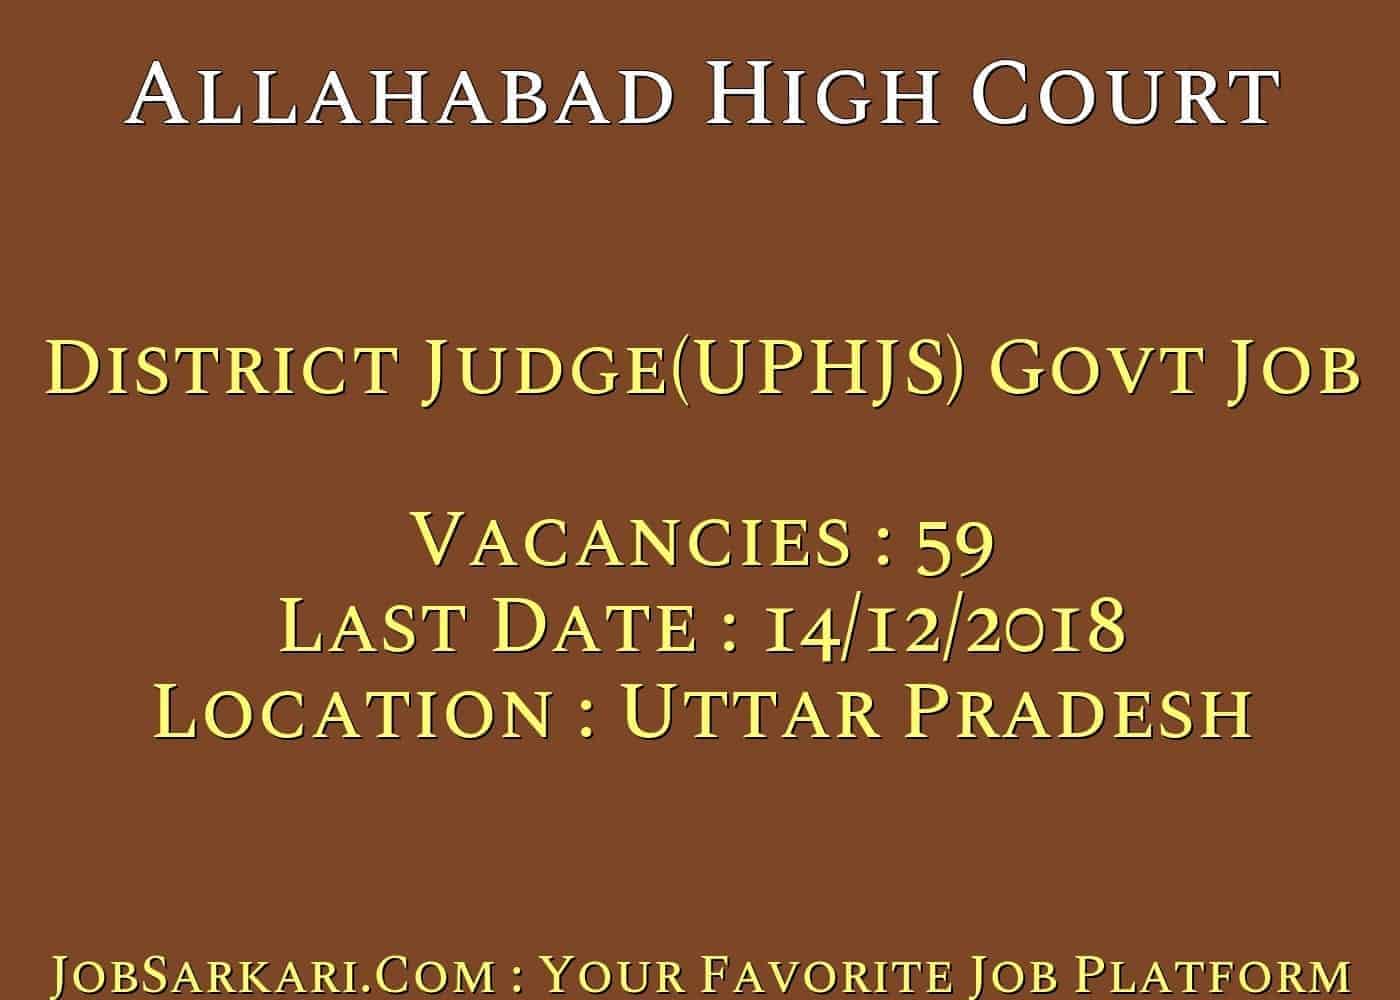 Allahabad High Court Recruitment 2018 for District Judge(UPHJS) Govt Job